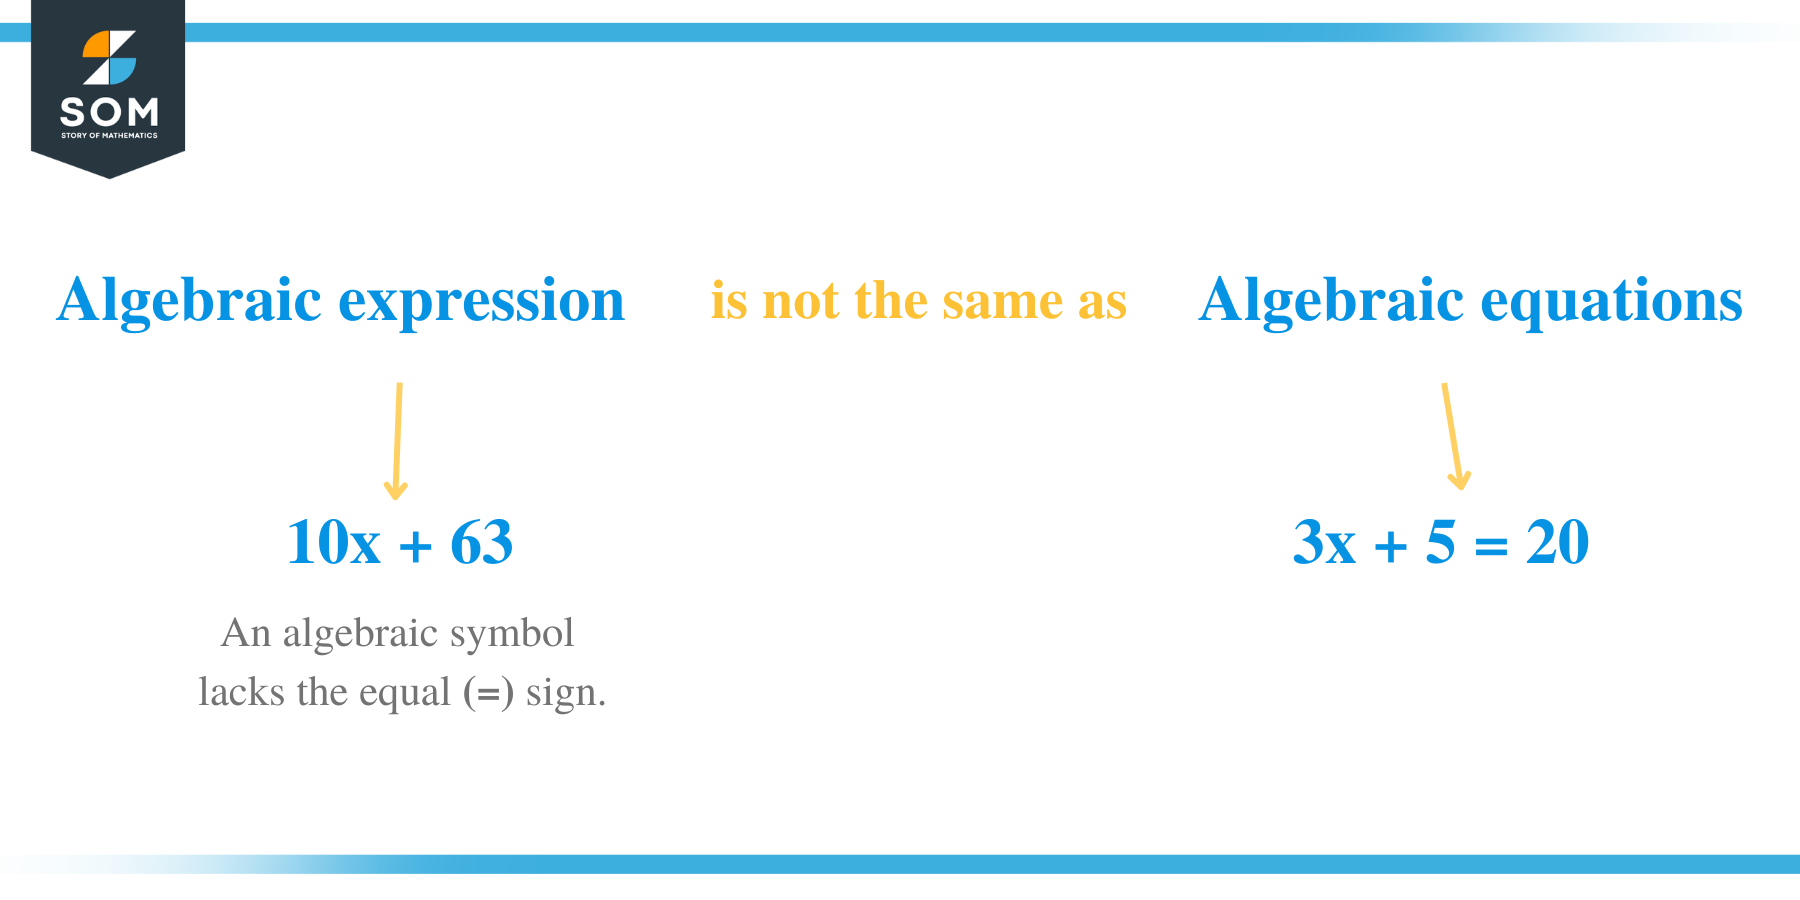 Algebraic expression and equations